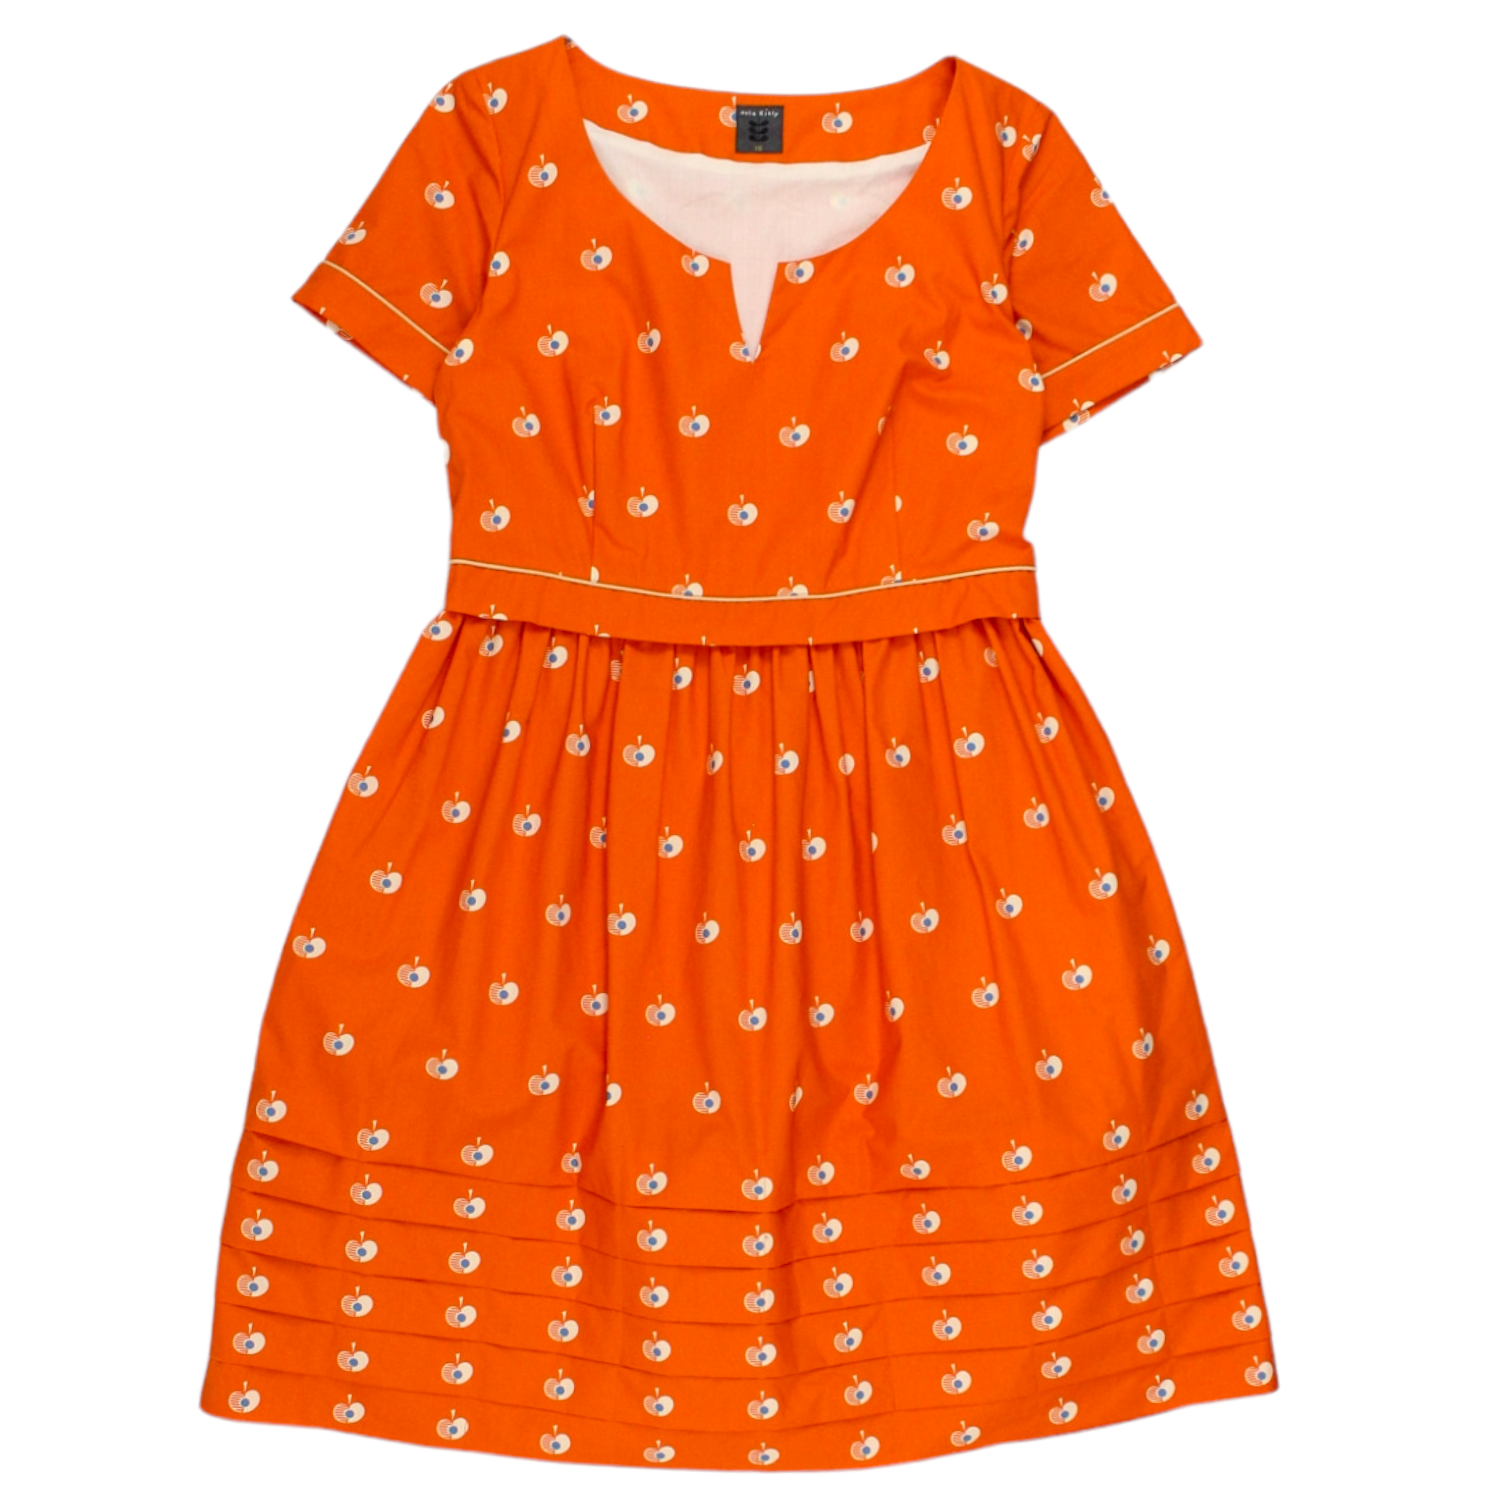 Orla Kiely Orange Apple Print Dress